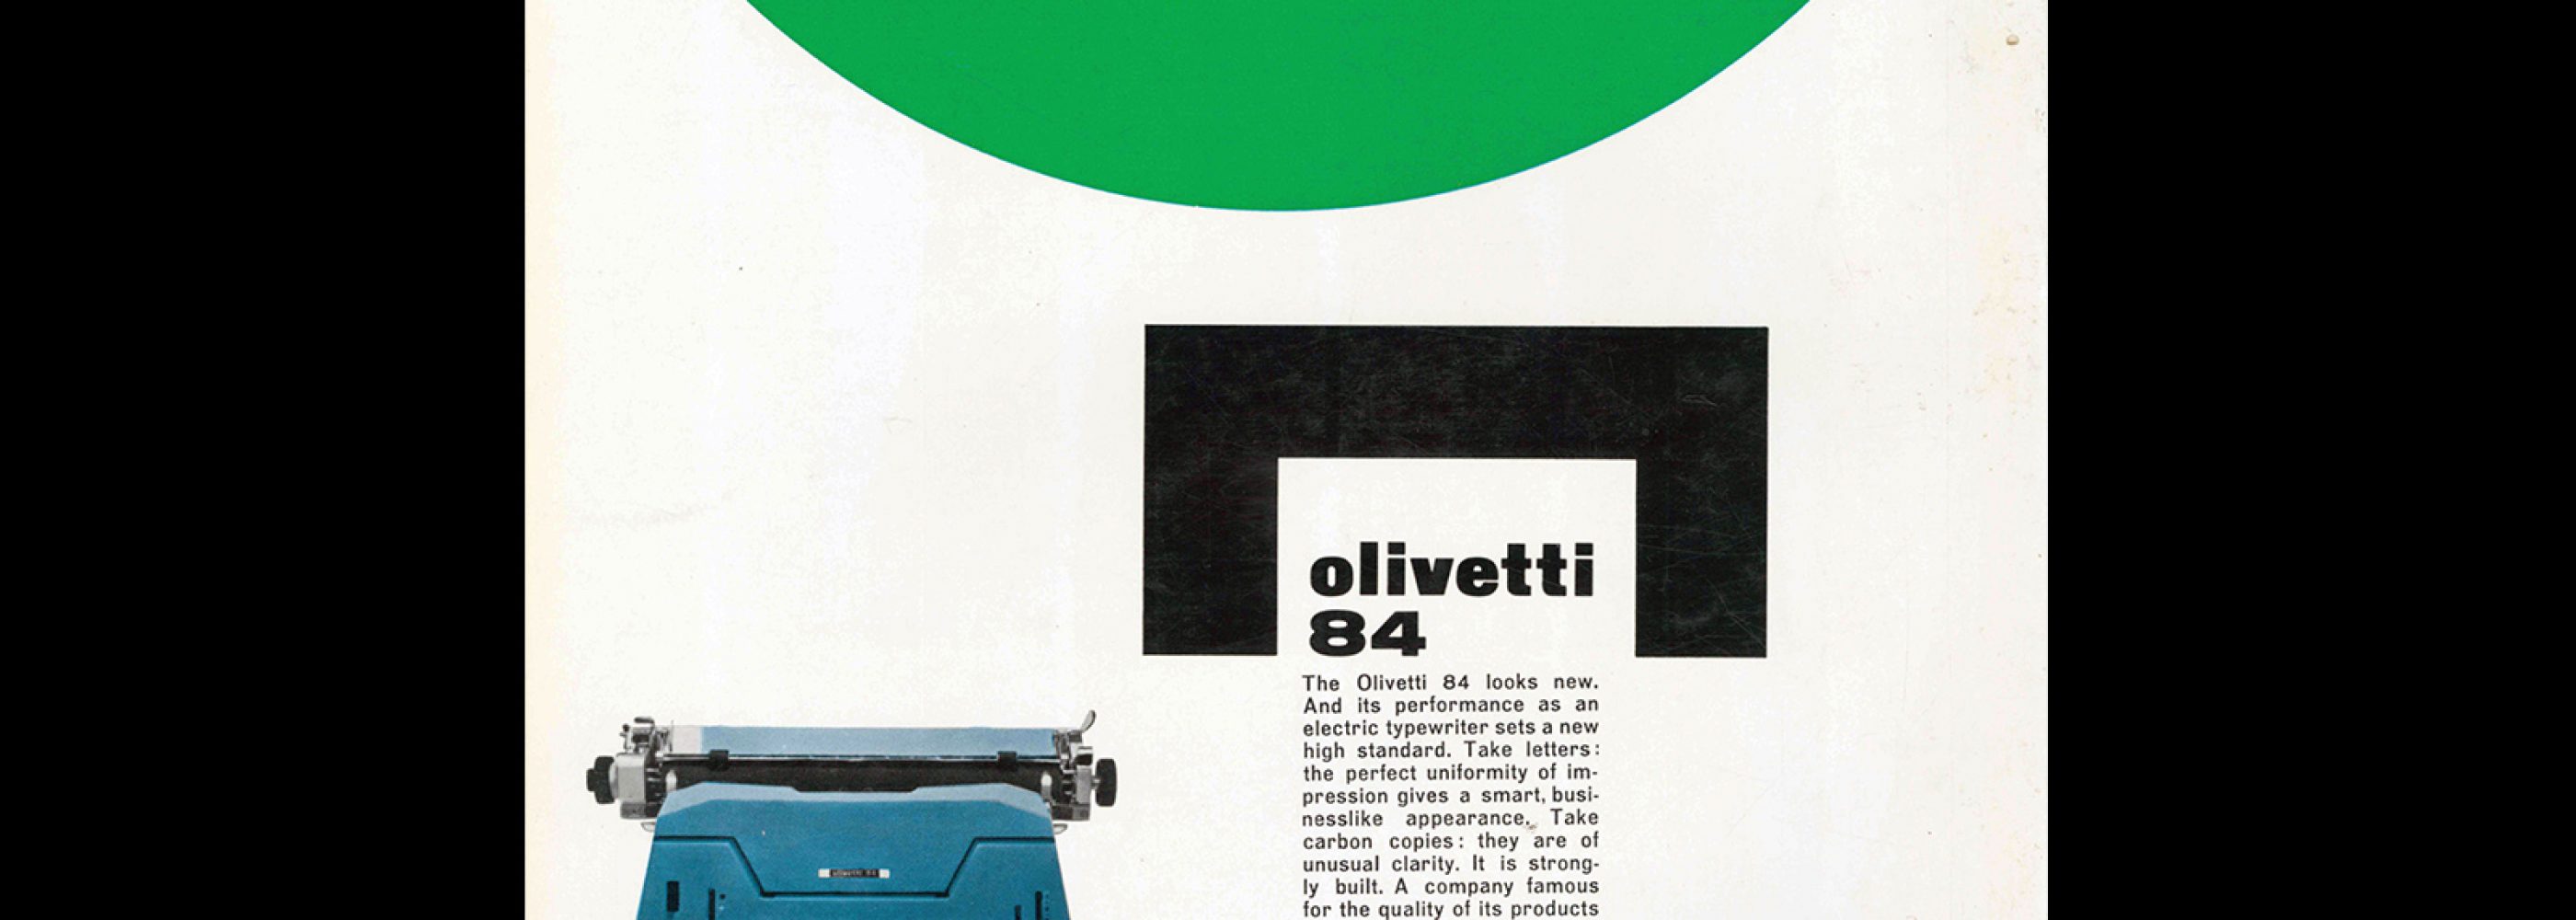 Olivetti 84, advertisement, 1962. Designed by Giovanni Pintori.